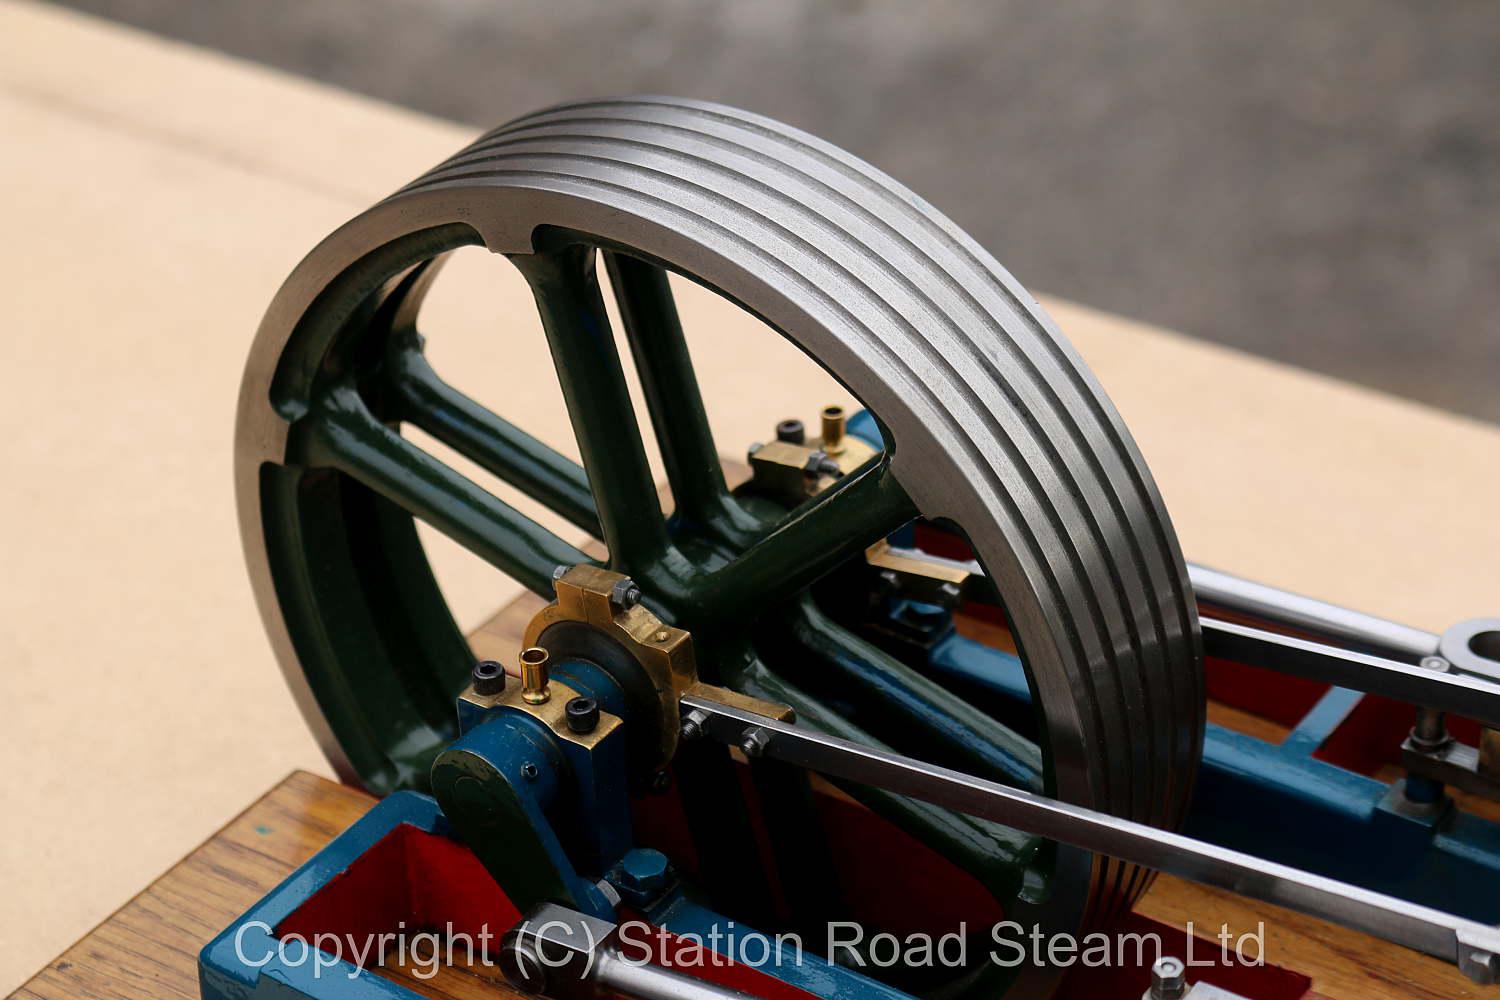 Stuart factory-machined Twin Victoria mill engine